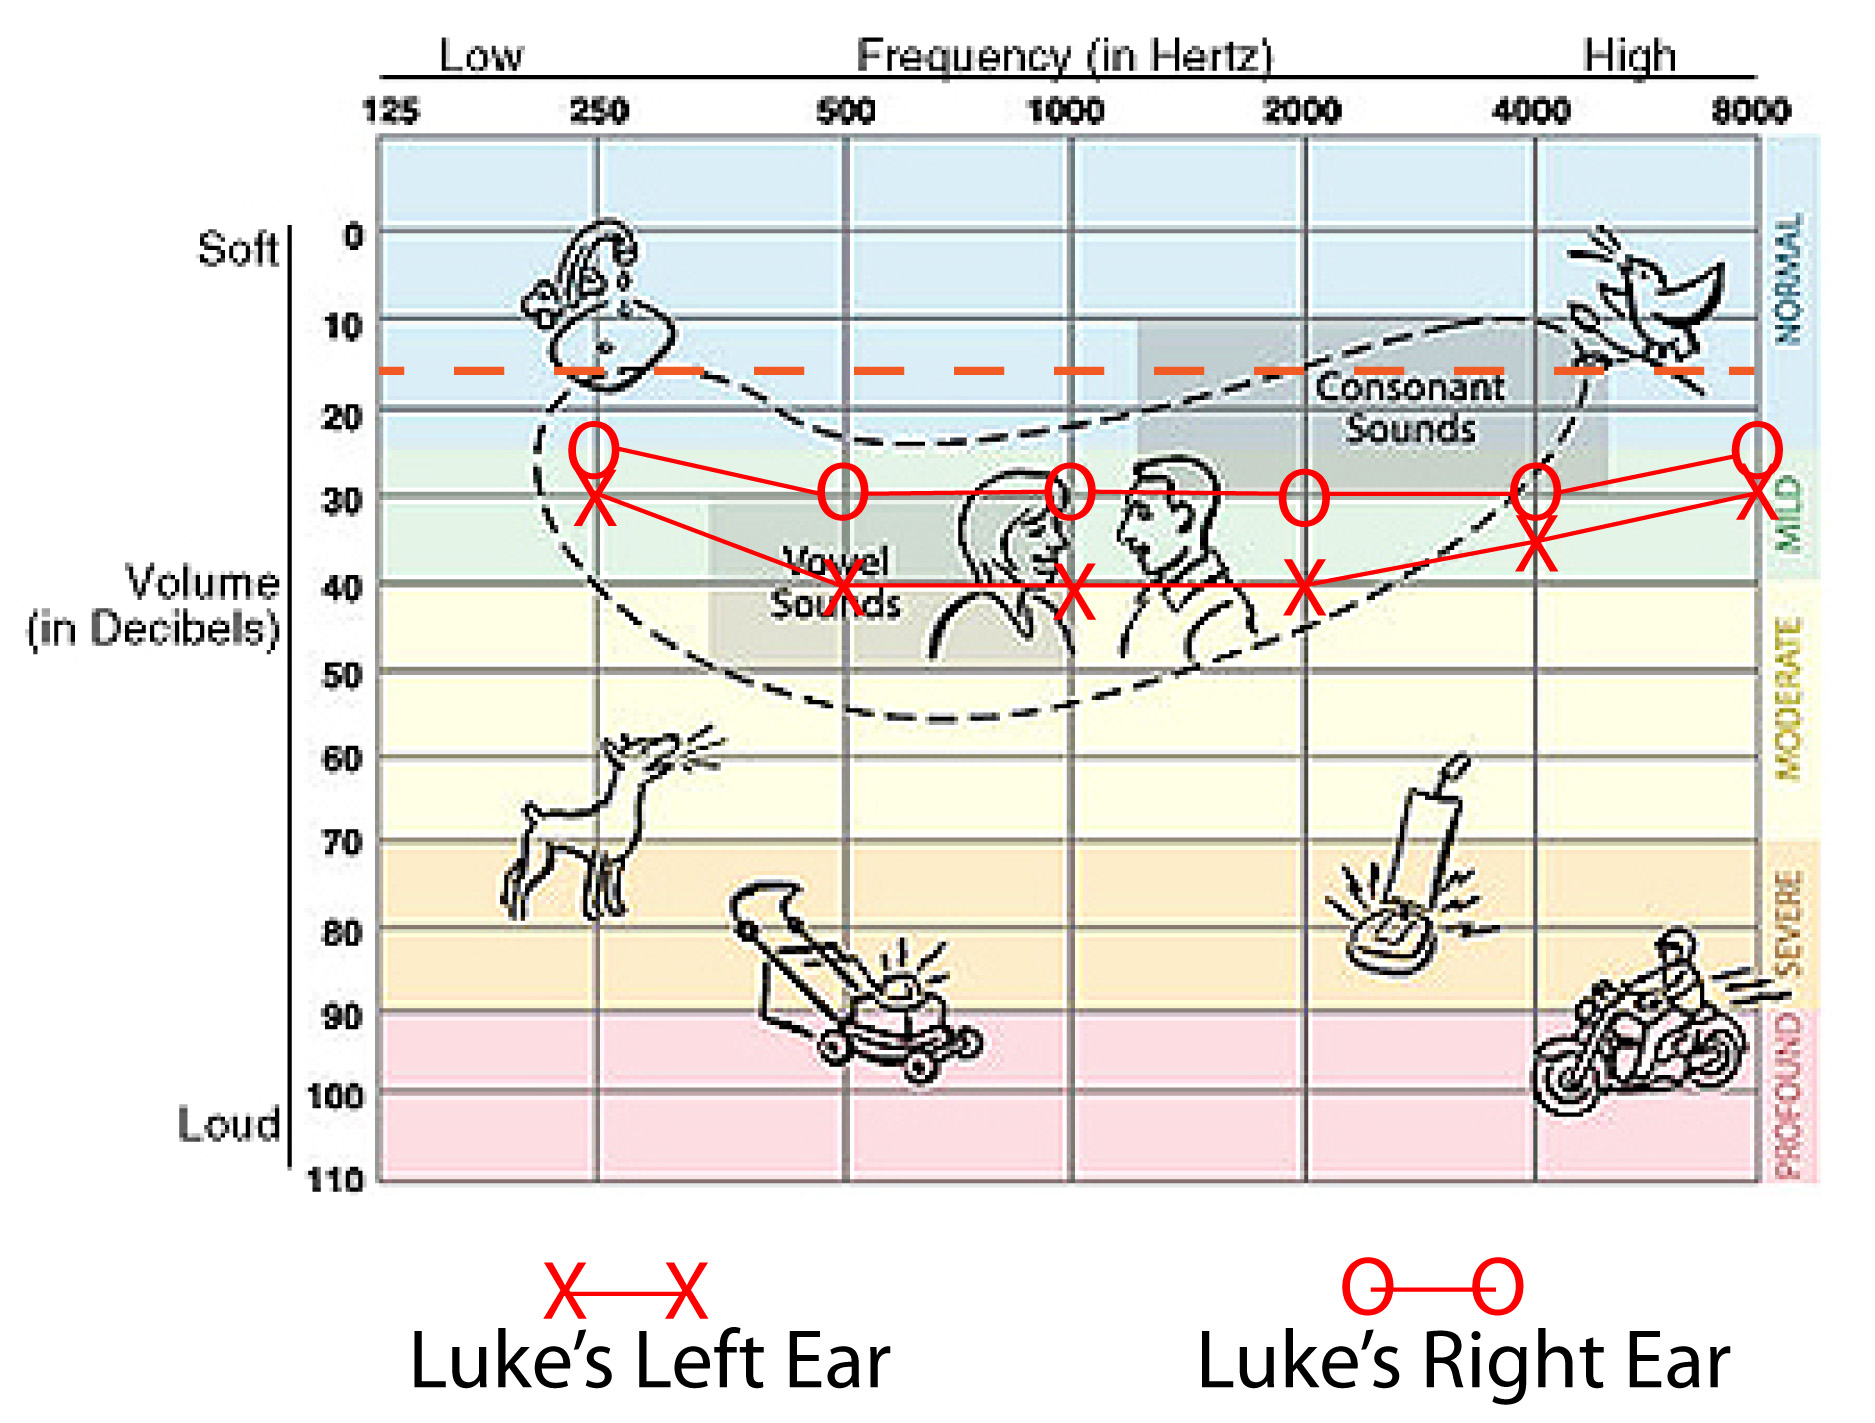 Hearing Loss Range Chart